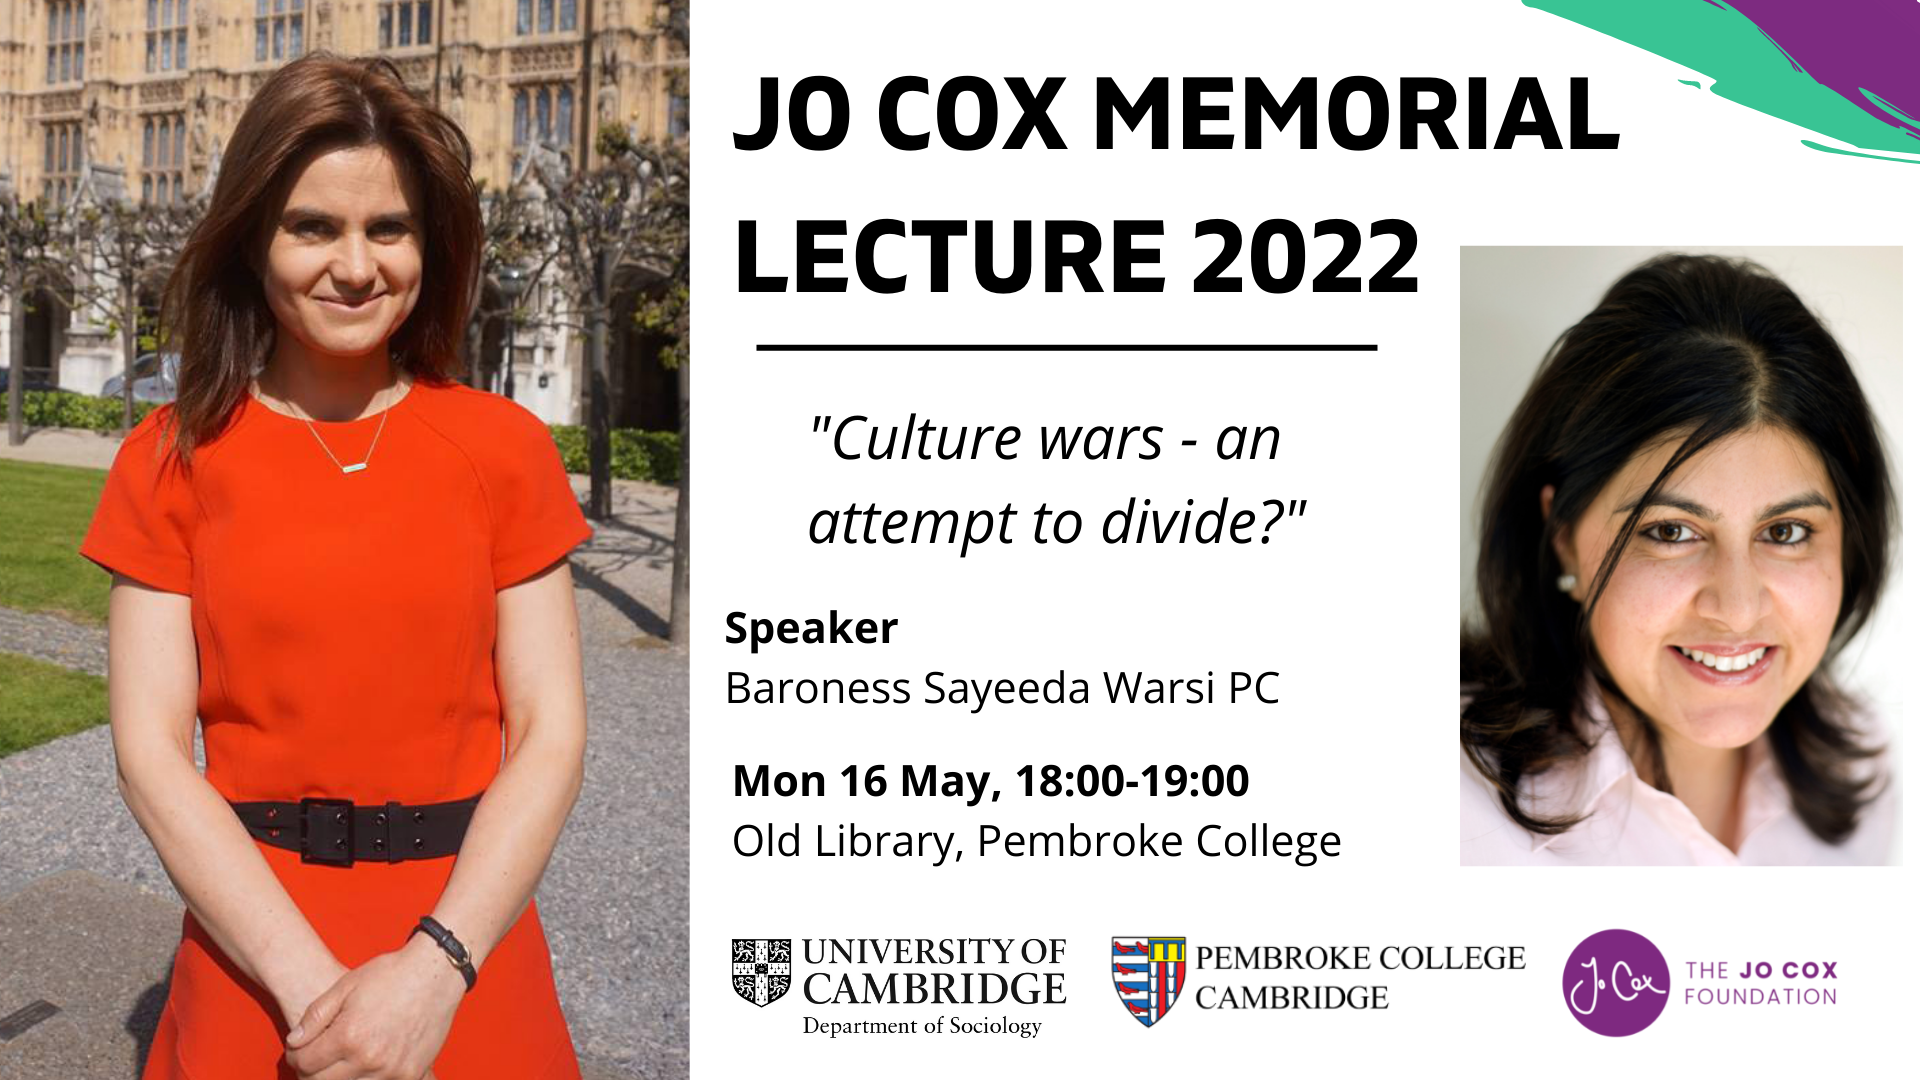 Jo Cox Memorial Lecture 2022 card